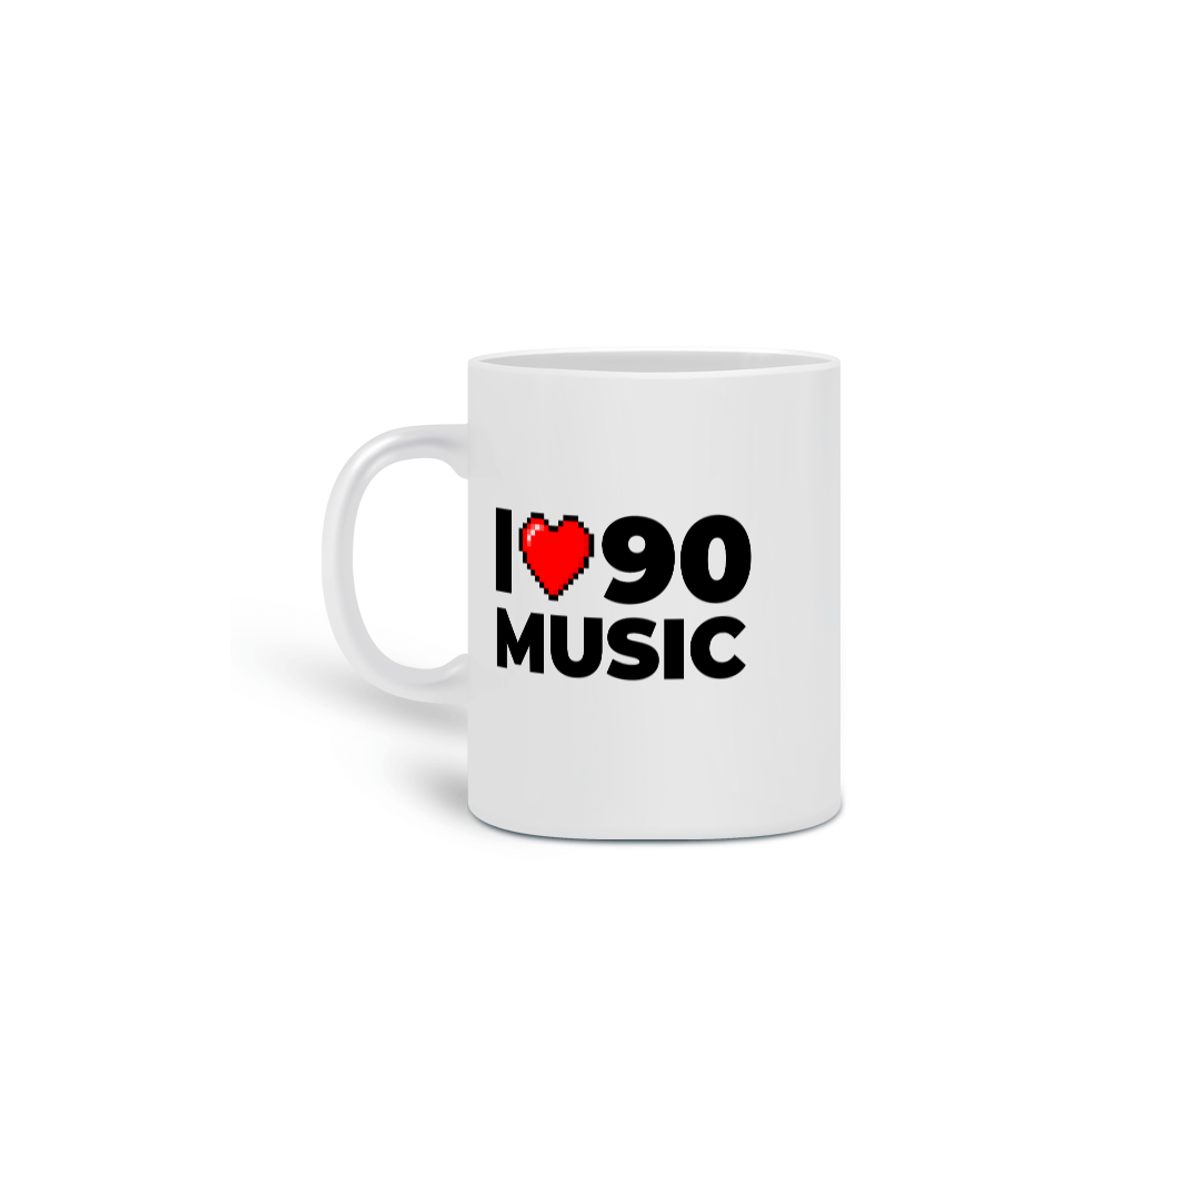 Nome do produto: I LOVE 90 MUSIC